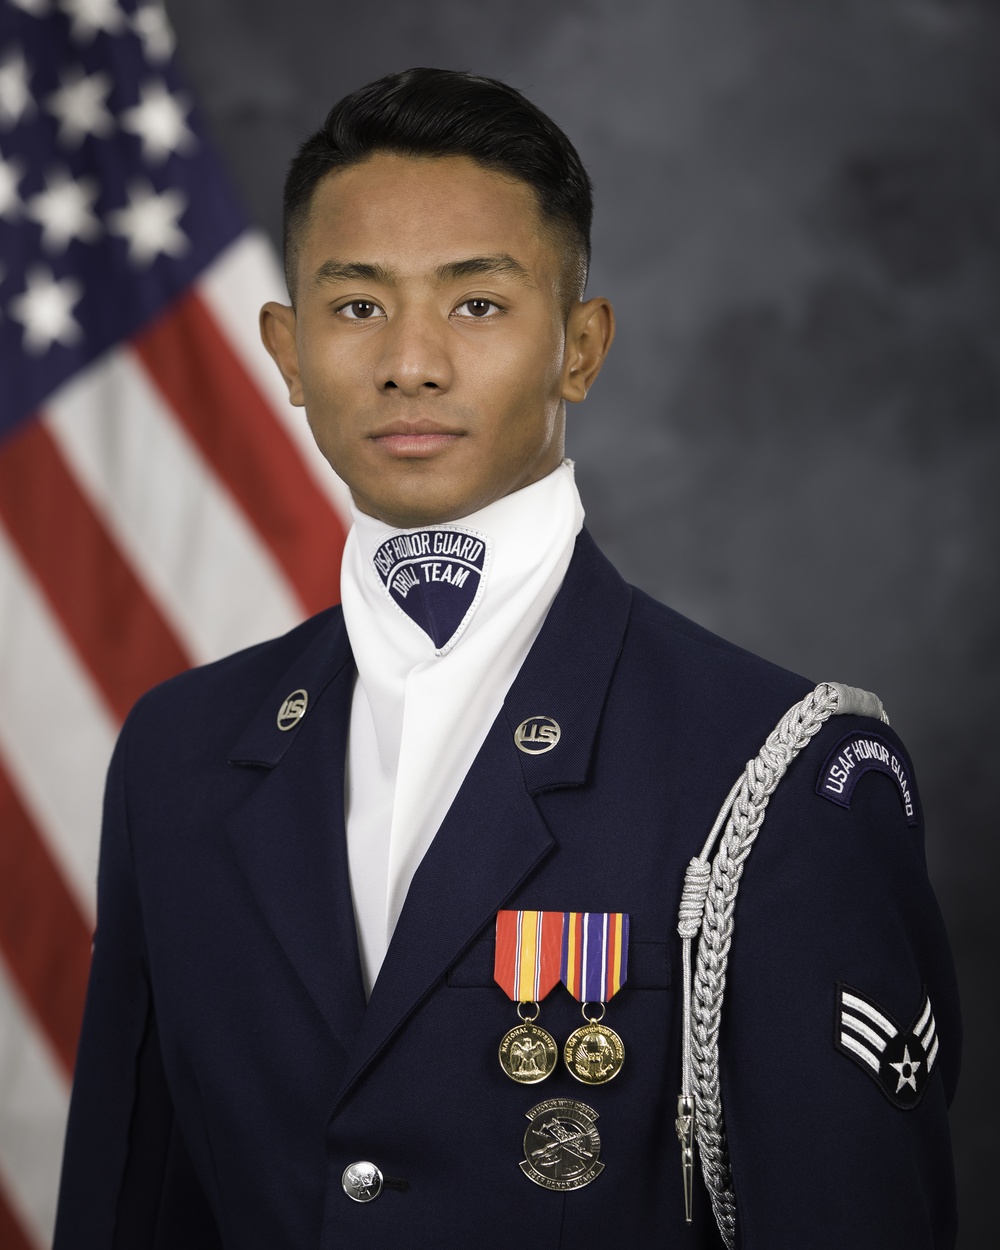 Official portrait, US Air Force Honor Guard Drill Team member, Senior Airman Myron Lam, US Air Force